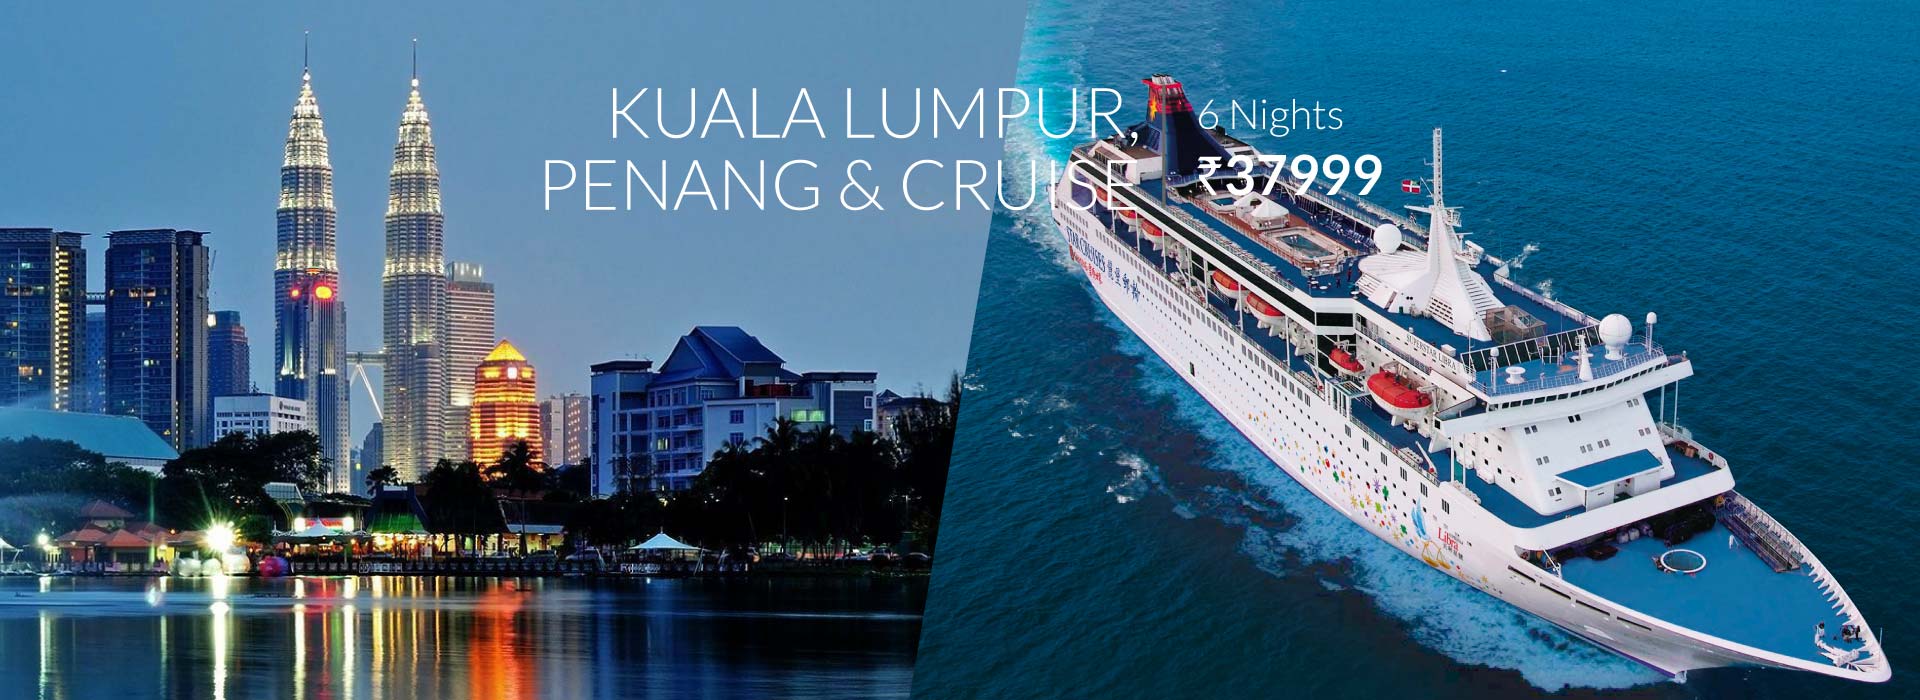 Kuala Lumpur, Penang & Cruise